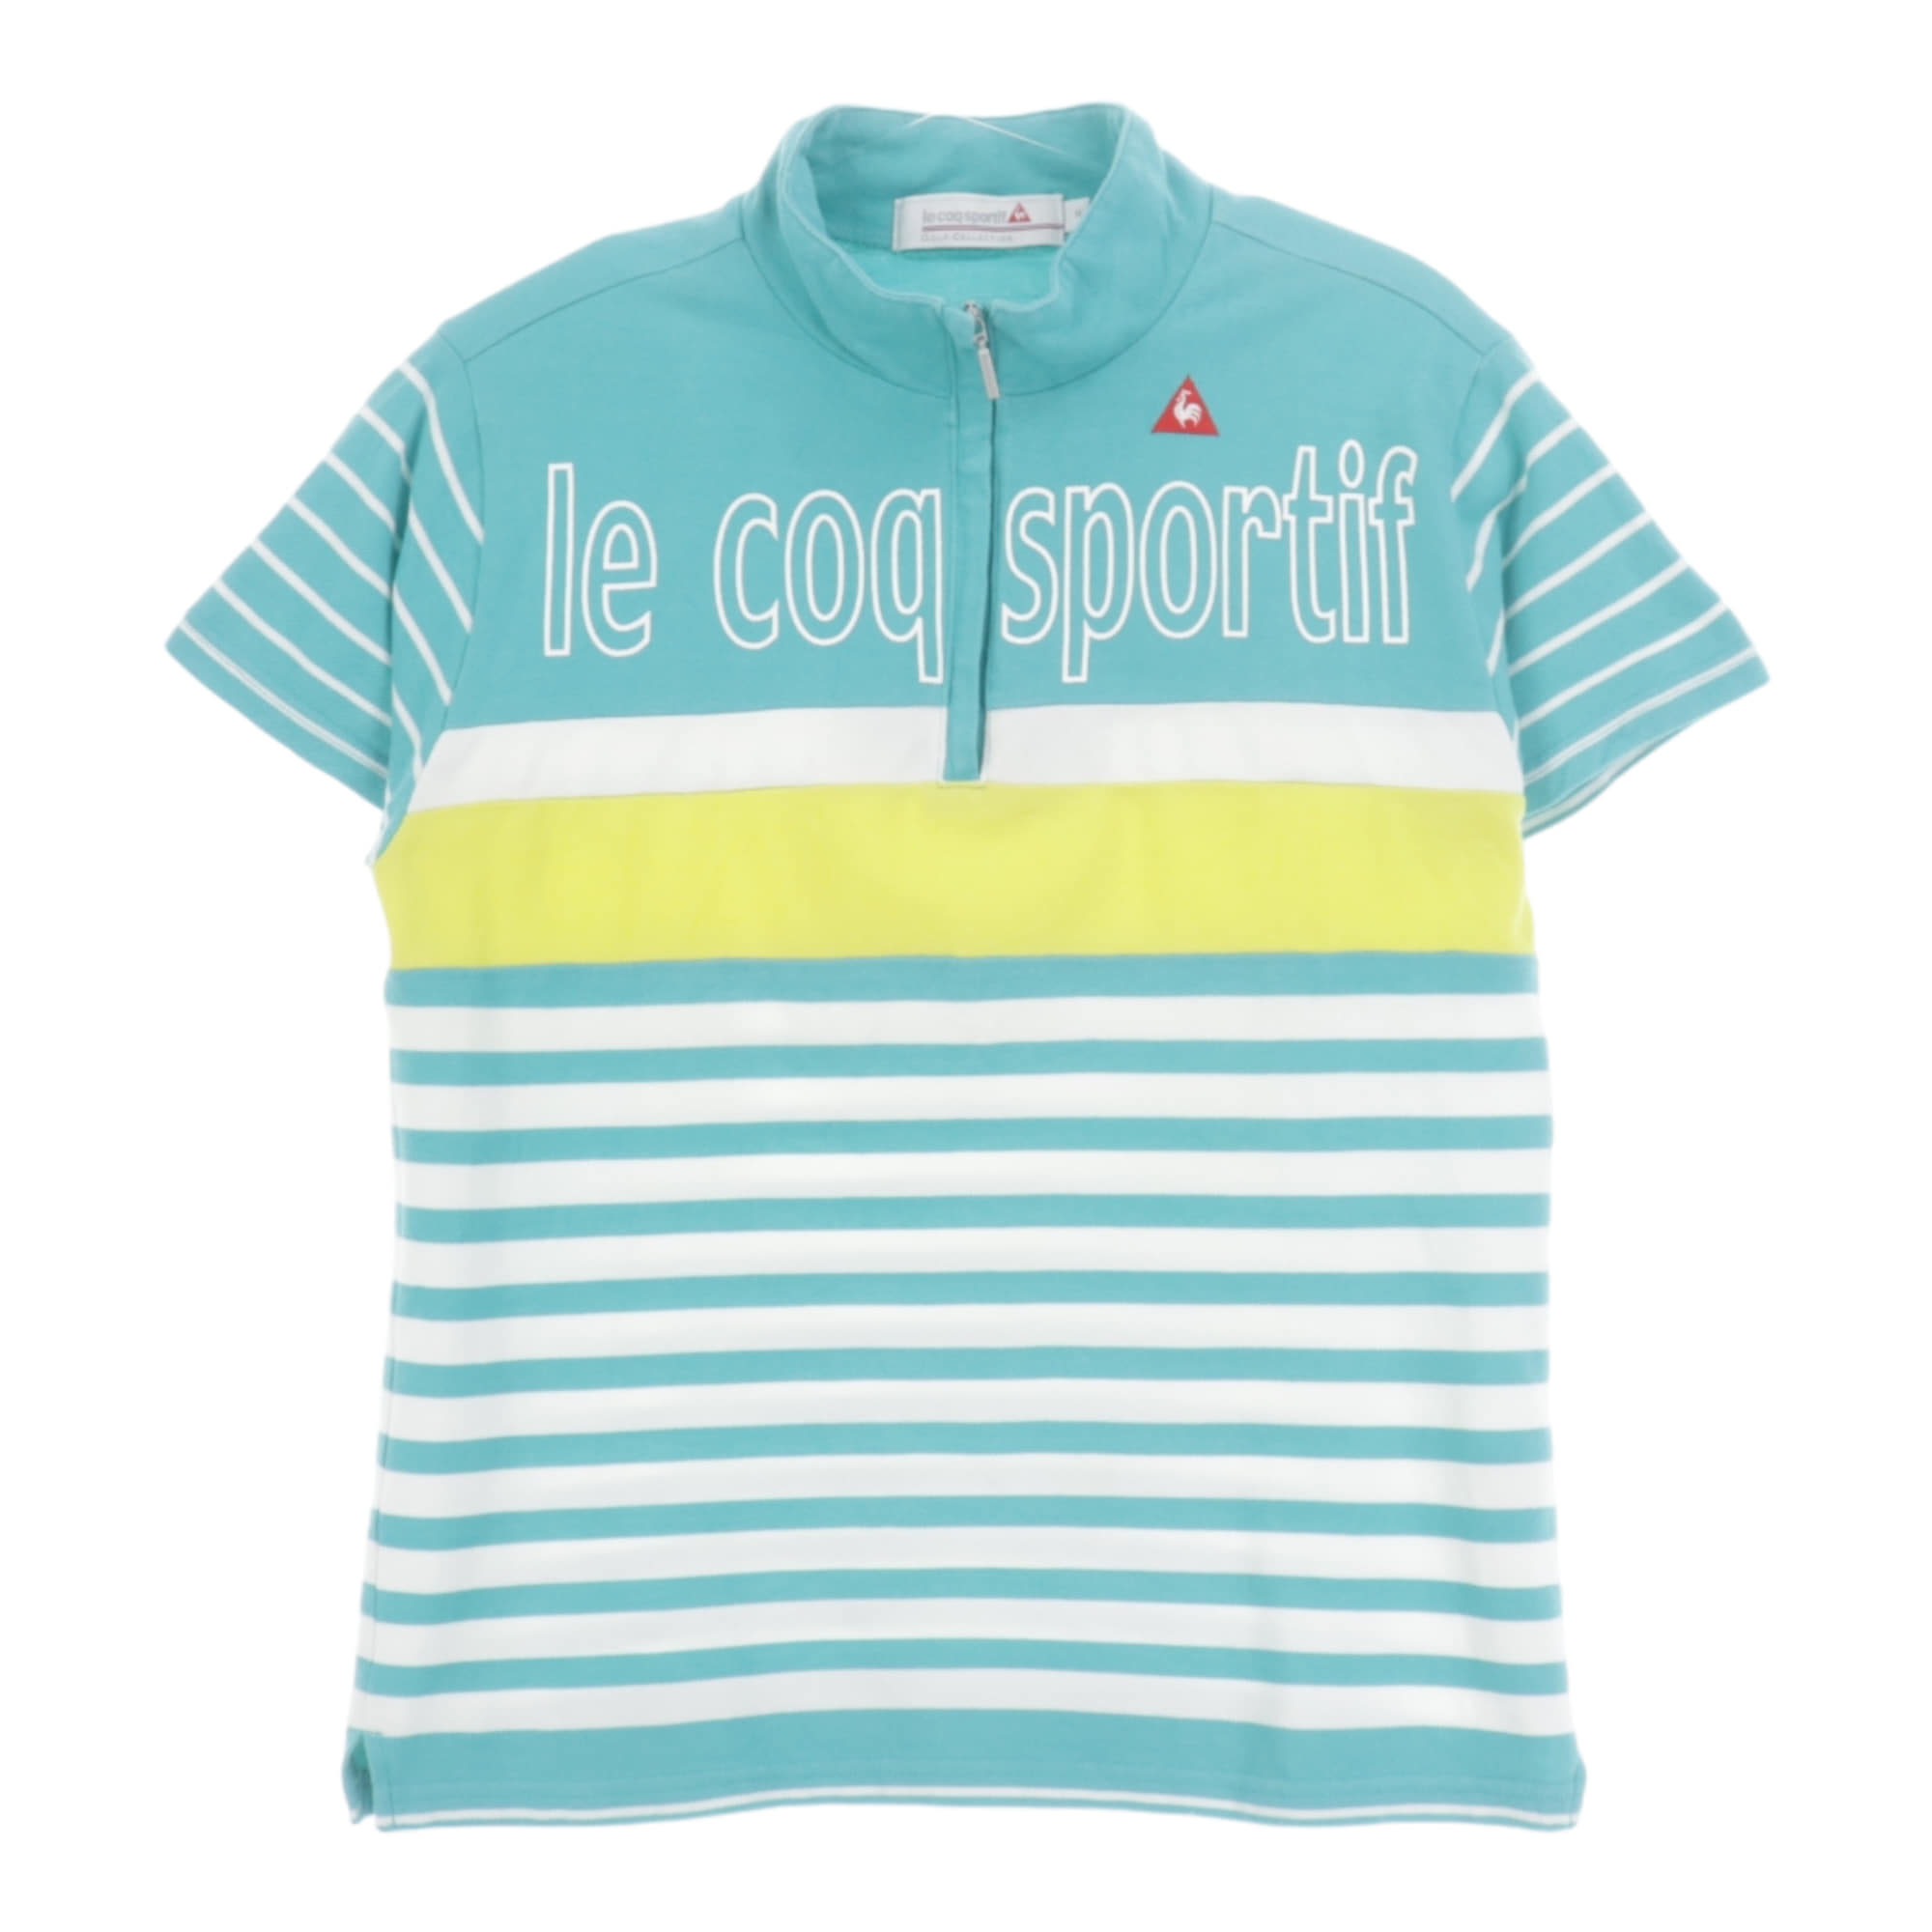 Le Coq Sportif Golf Collection,T-Shirts